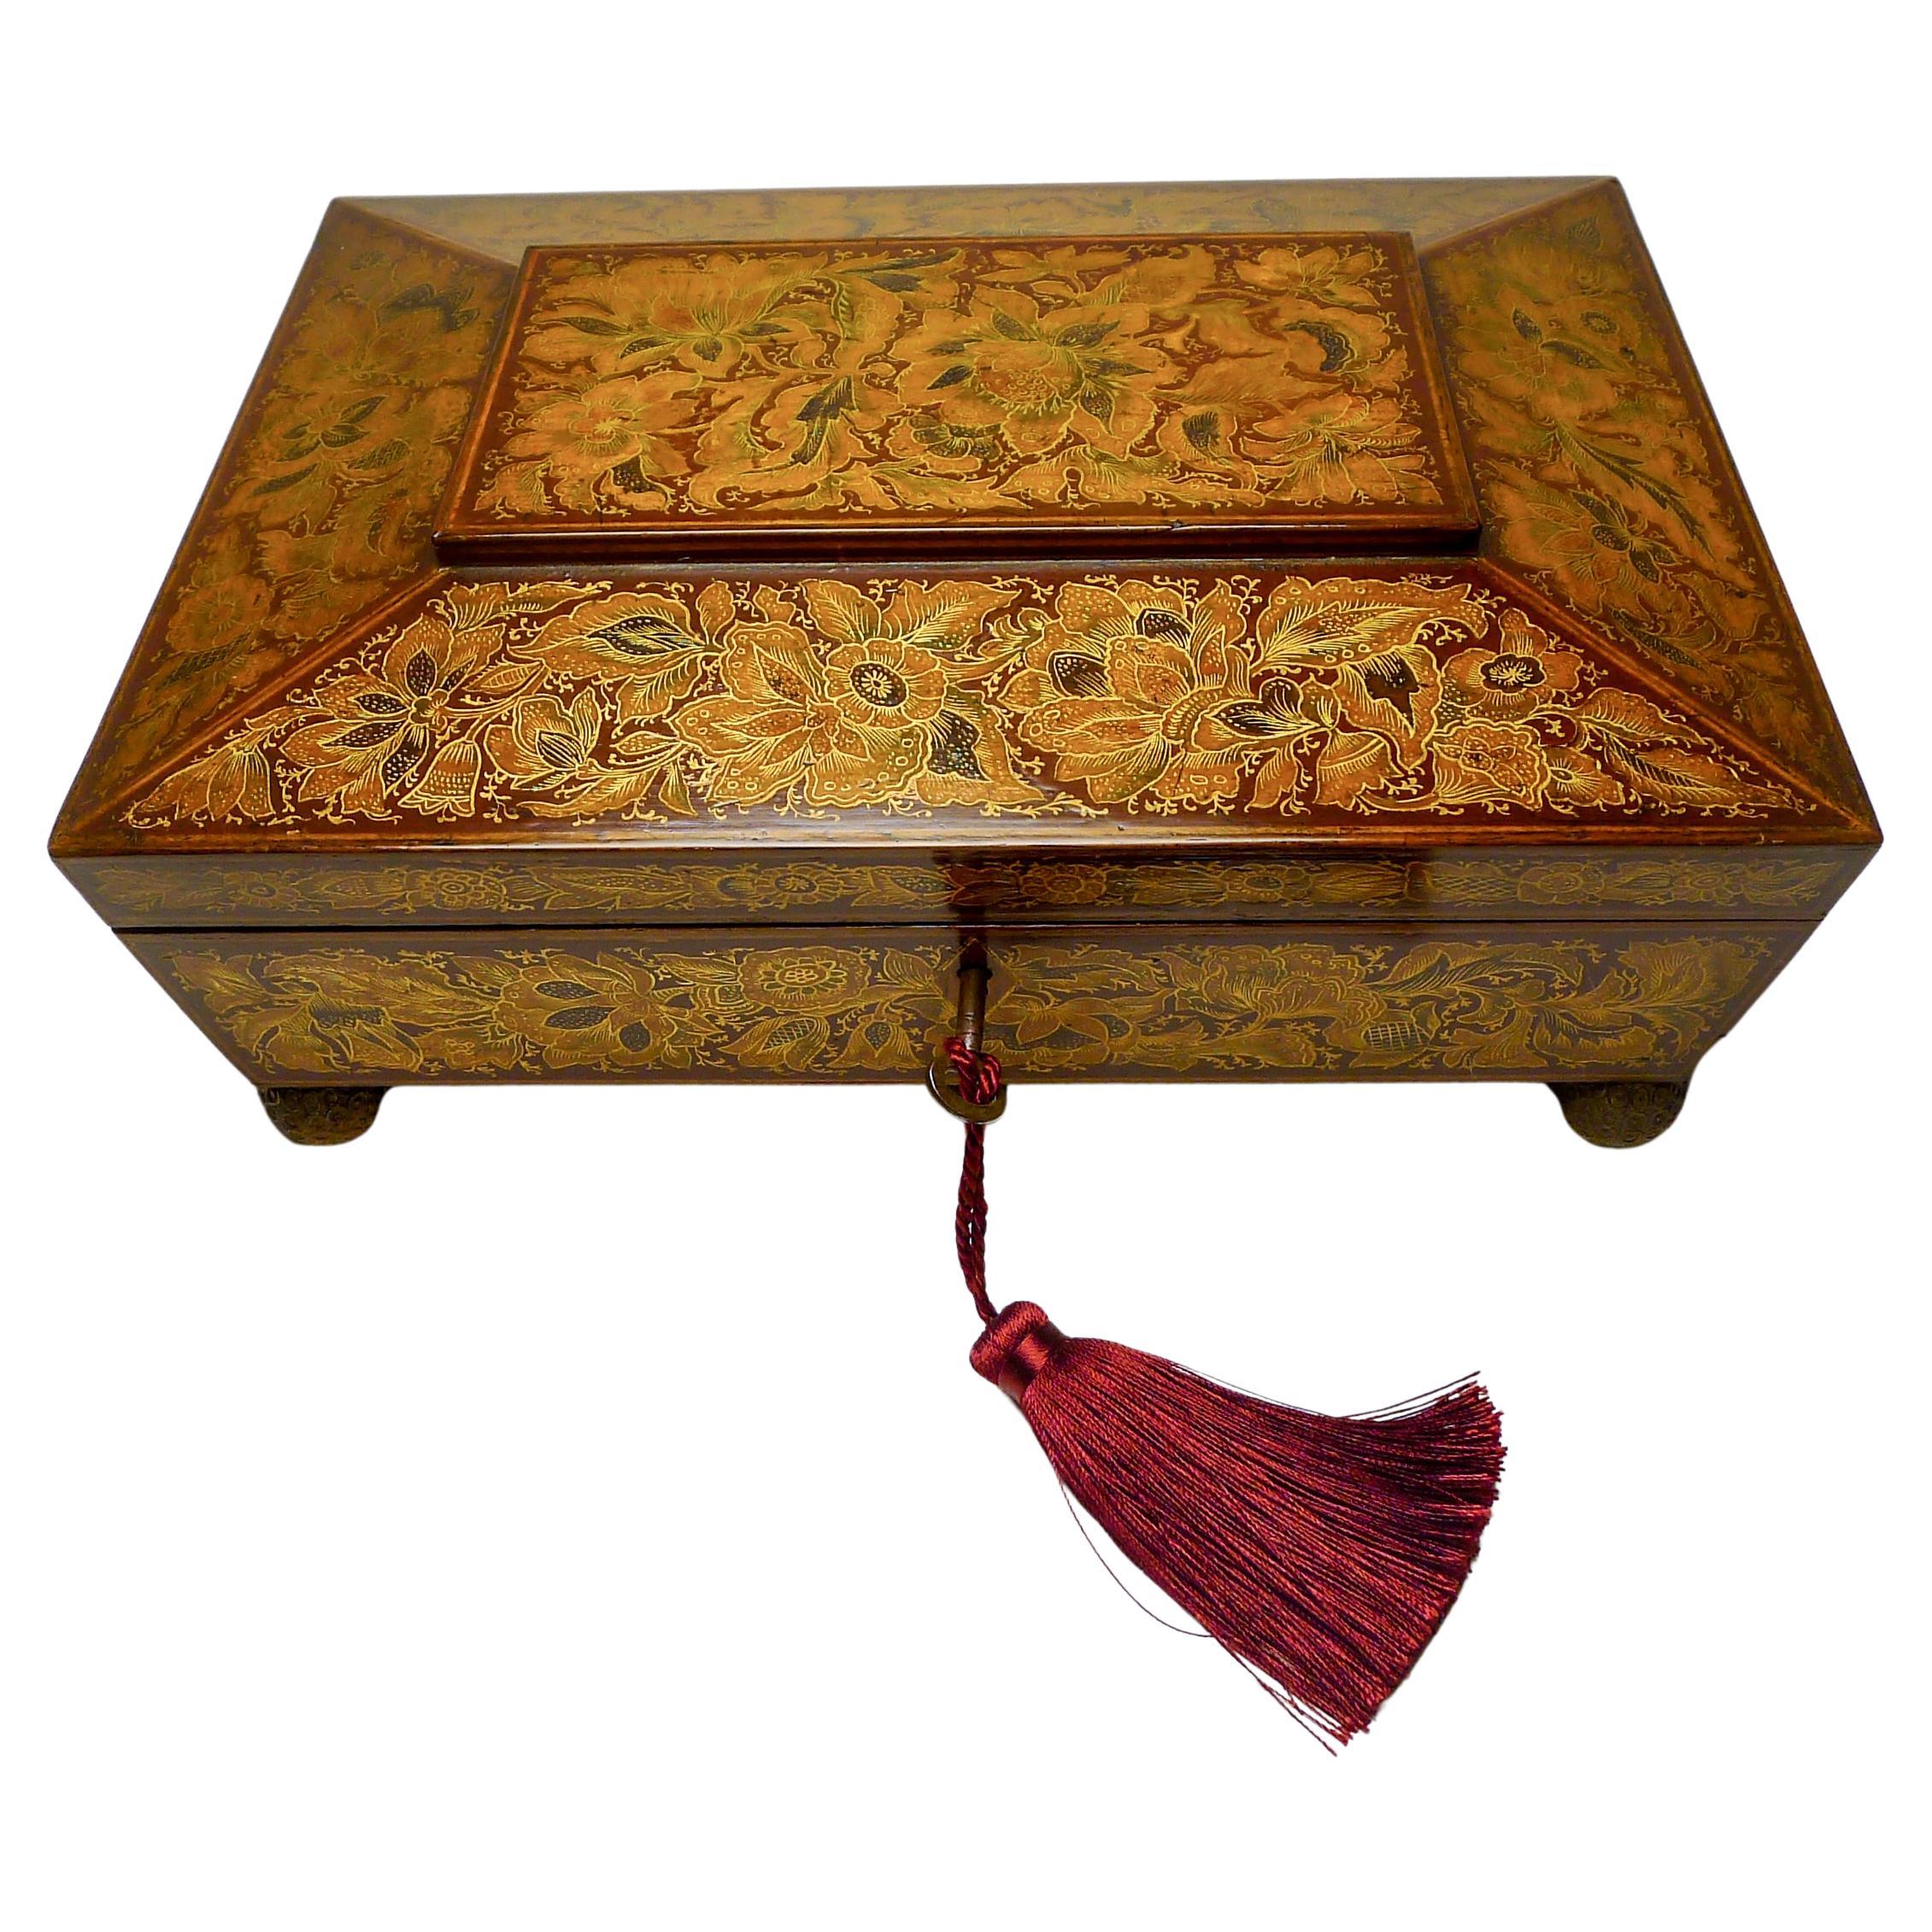 Stunning Antique English Regency Penwork Games Box c.1820